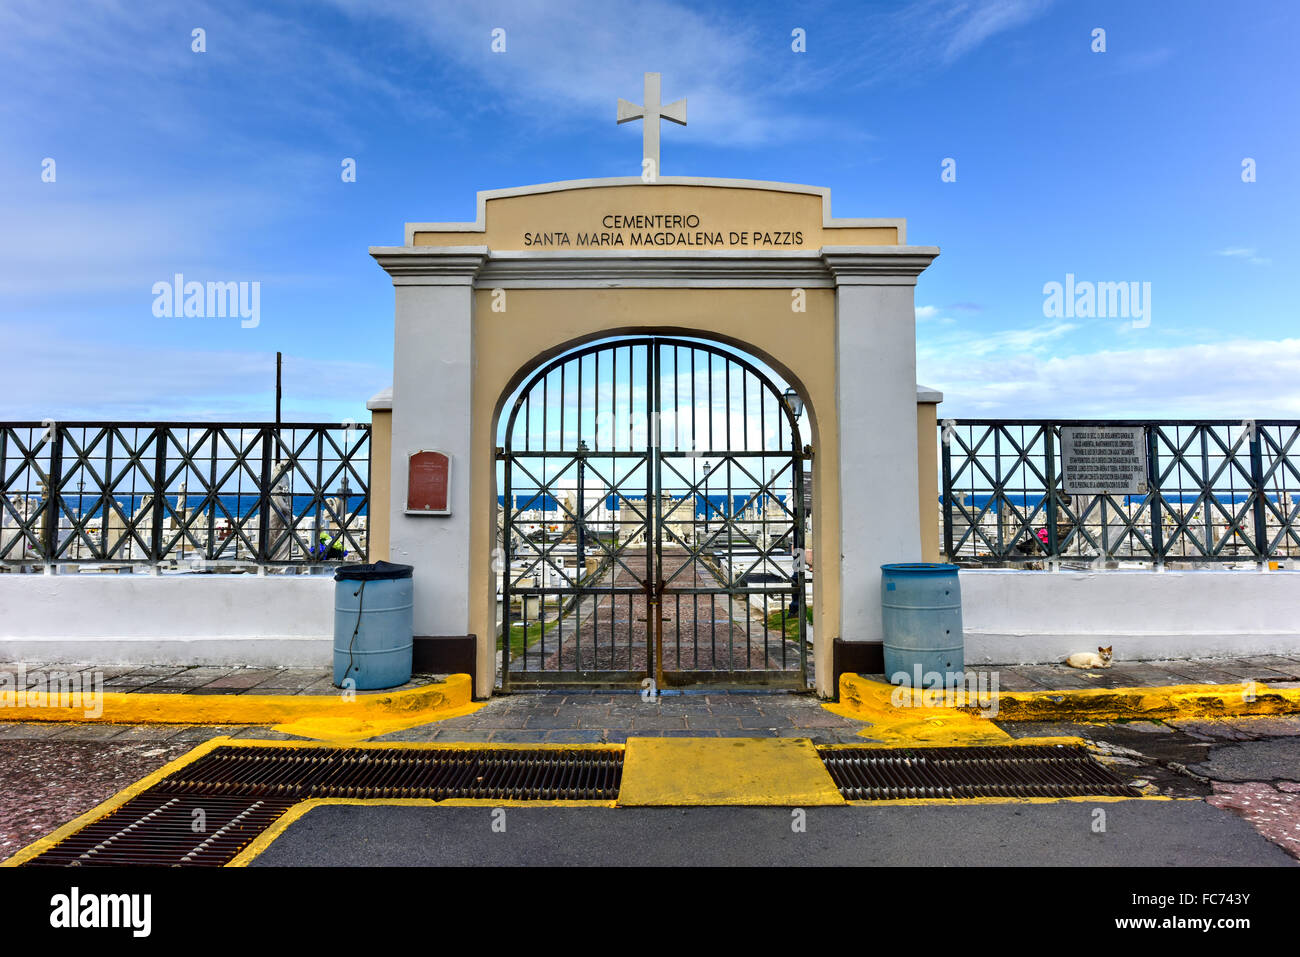 Santa Maria Magdalena de Pazzis colonial era cemetery located in Old San Juan, Puerto Rico. Stock Photo